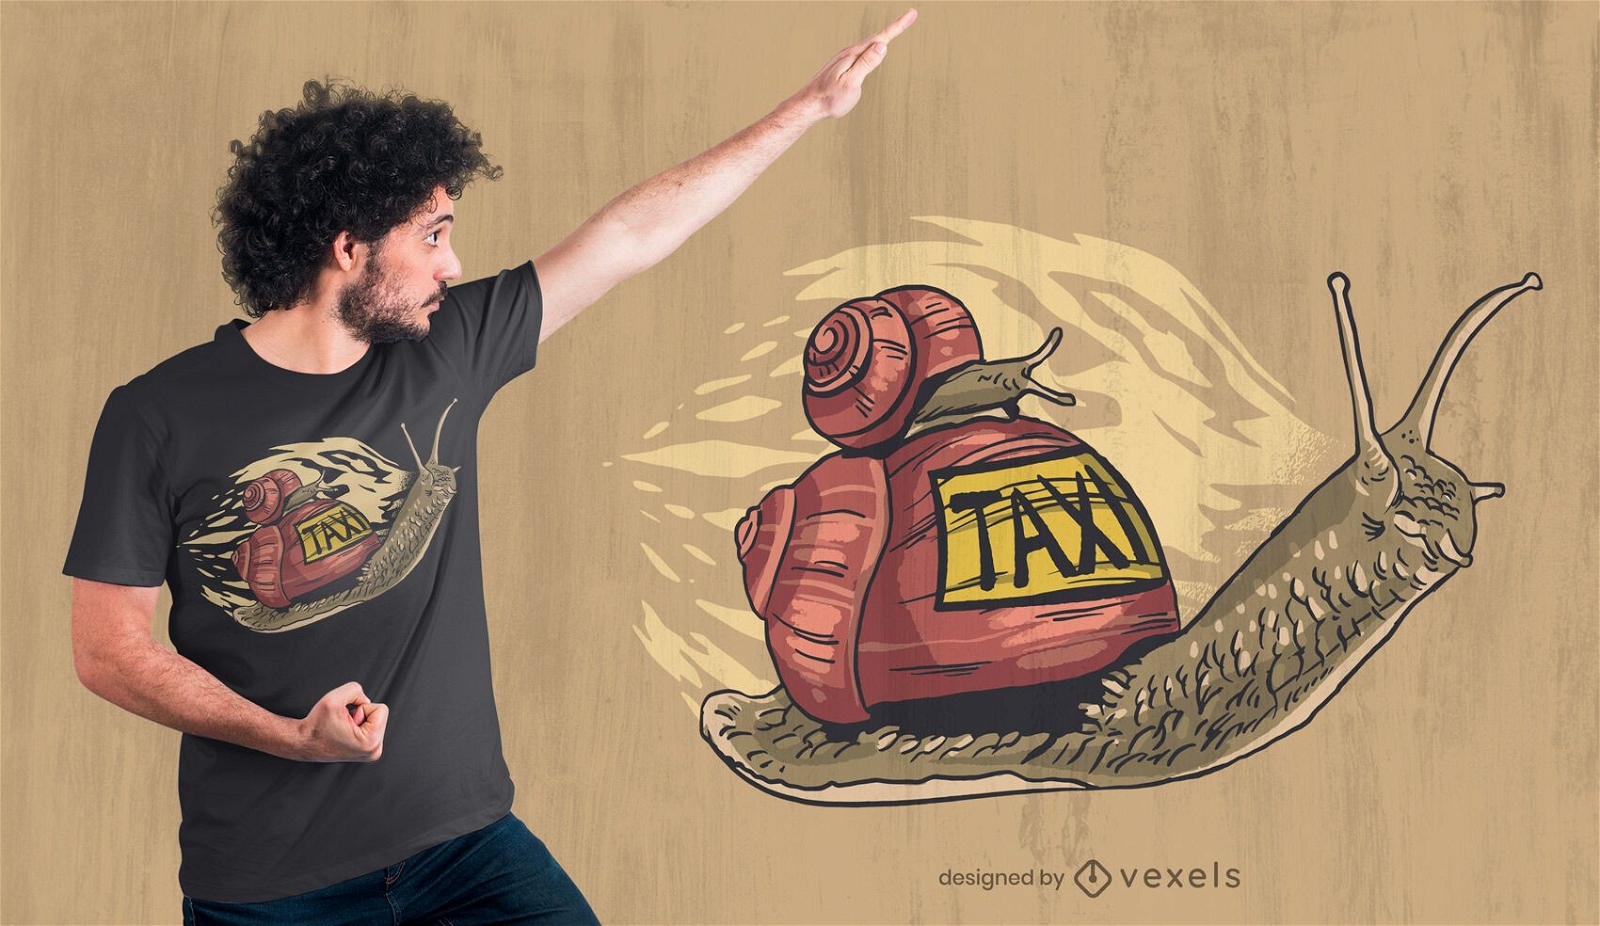 Snail taxi t-shirt design